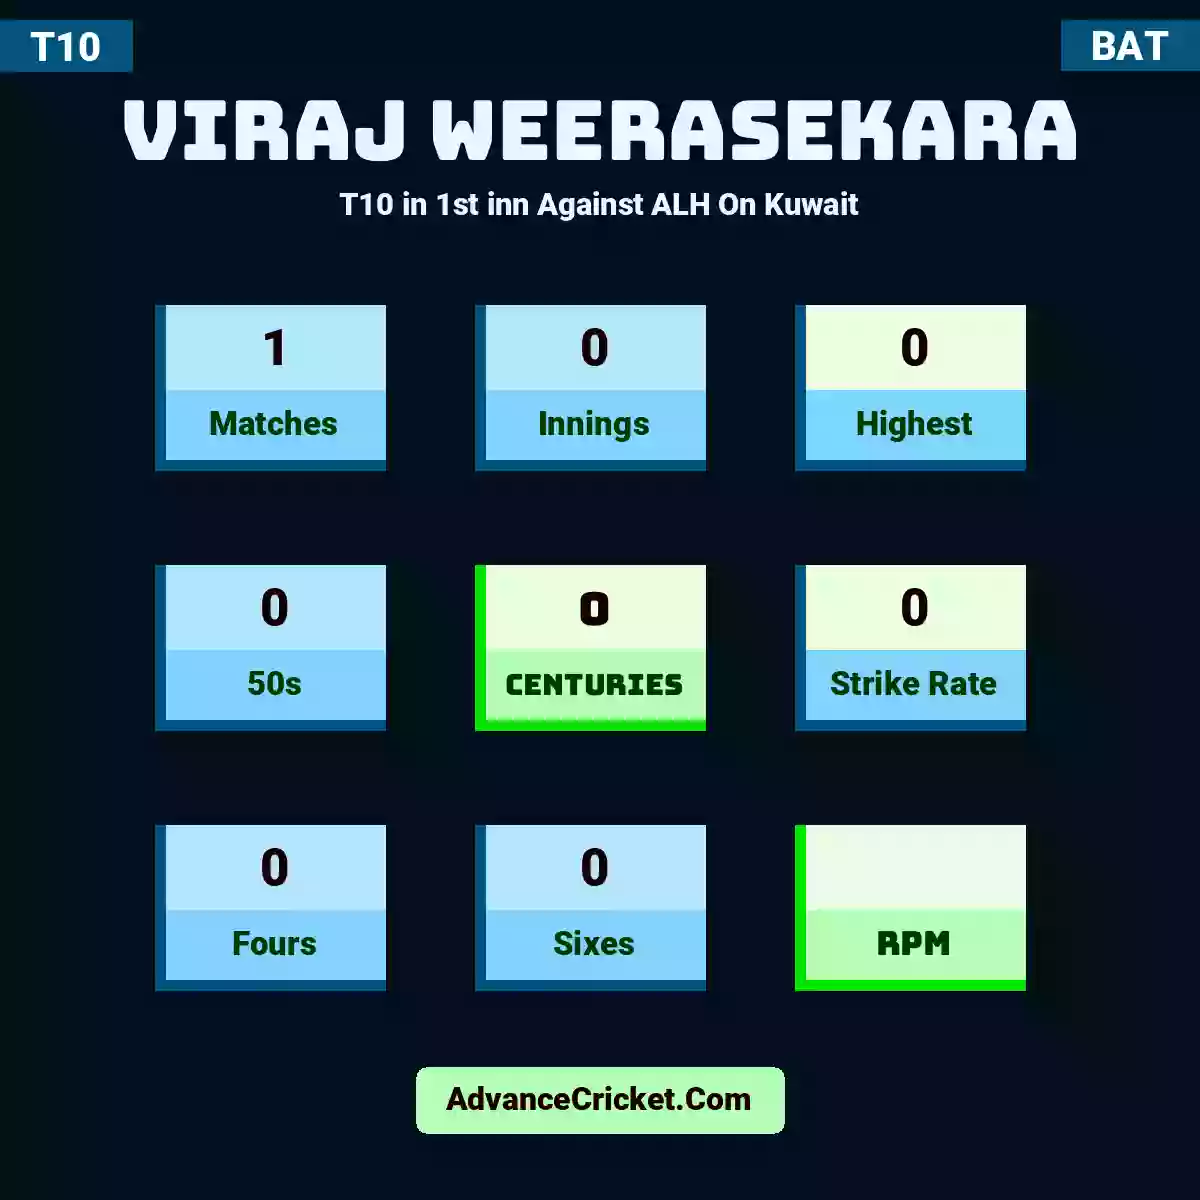 Viraj Weerasekara T10  in 1st inn Against ALH On Kuwait, Viraj Weerasekara played 1 matches, scored 0 runs as highest, 0 half-centuries, and 0 centuries, with a strike rate of 0. V.Weerasekara hit 0 fours and 0 sixes.